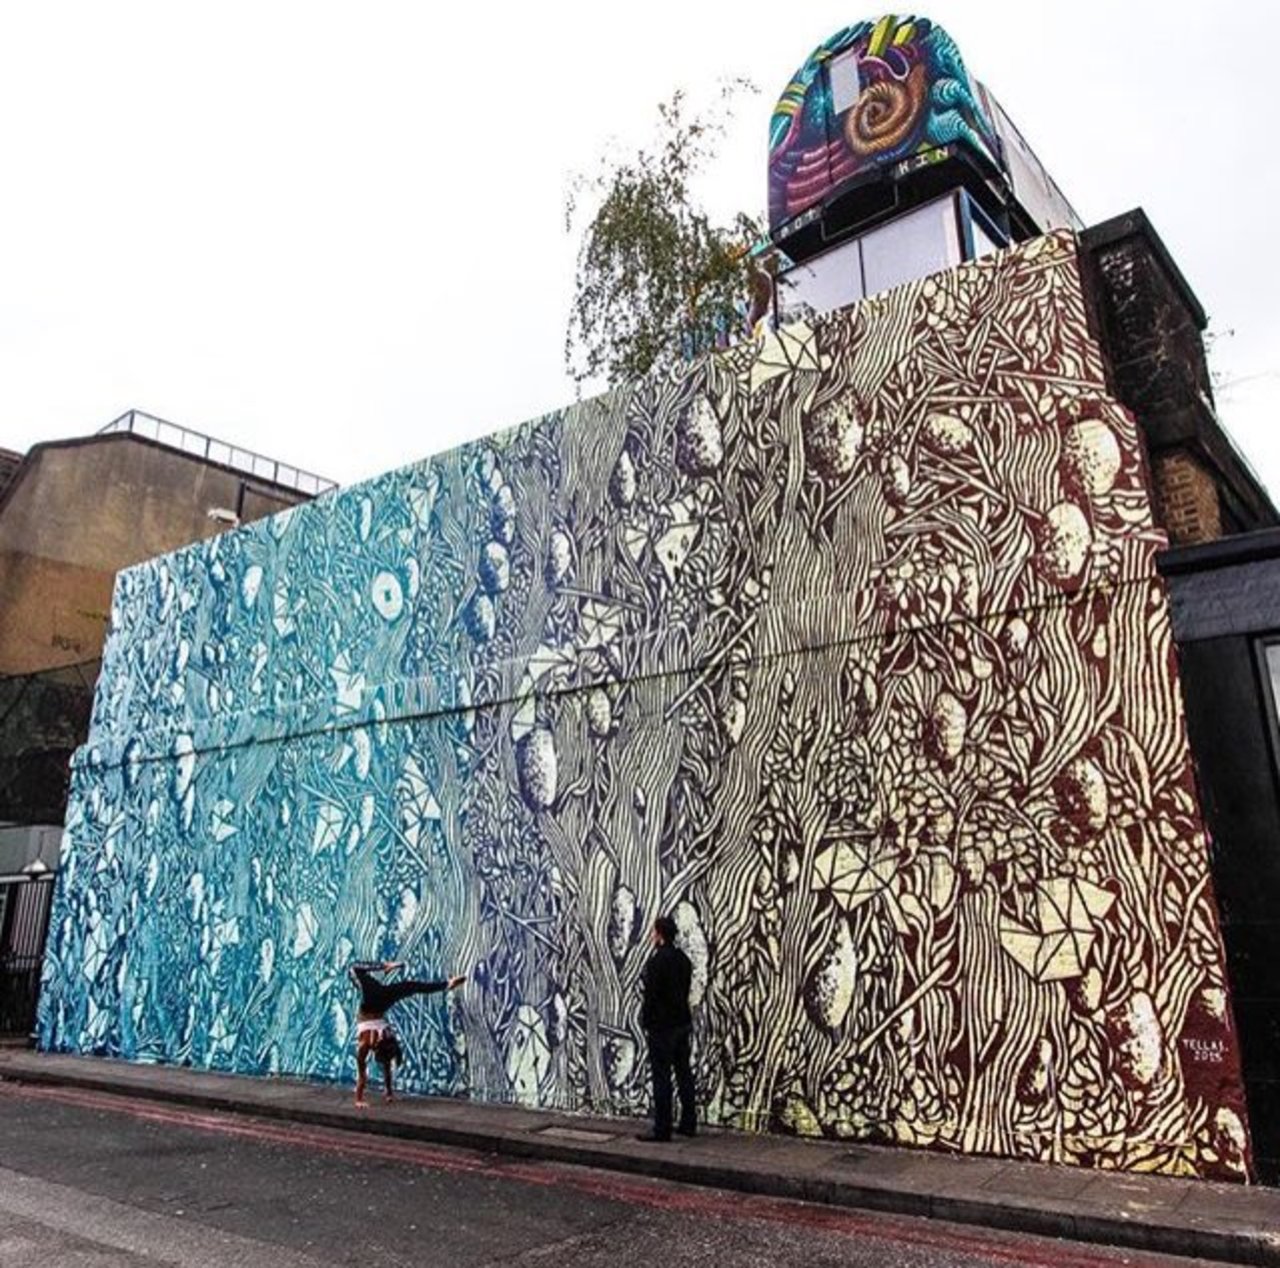 RT @GoogleStreetArt: New Street Art by Tellas in Shoreditch London 

#art #graffiti #mural #streetart https://t.co/dRdmCeG8RE